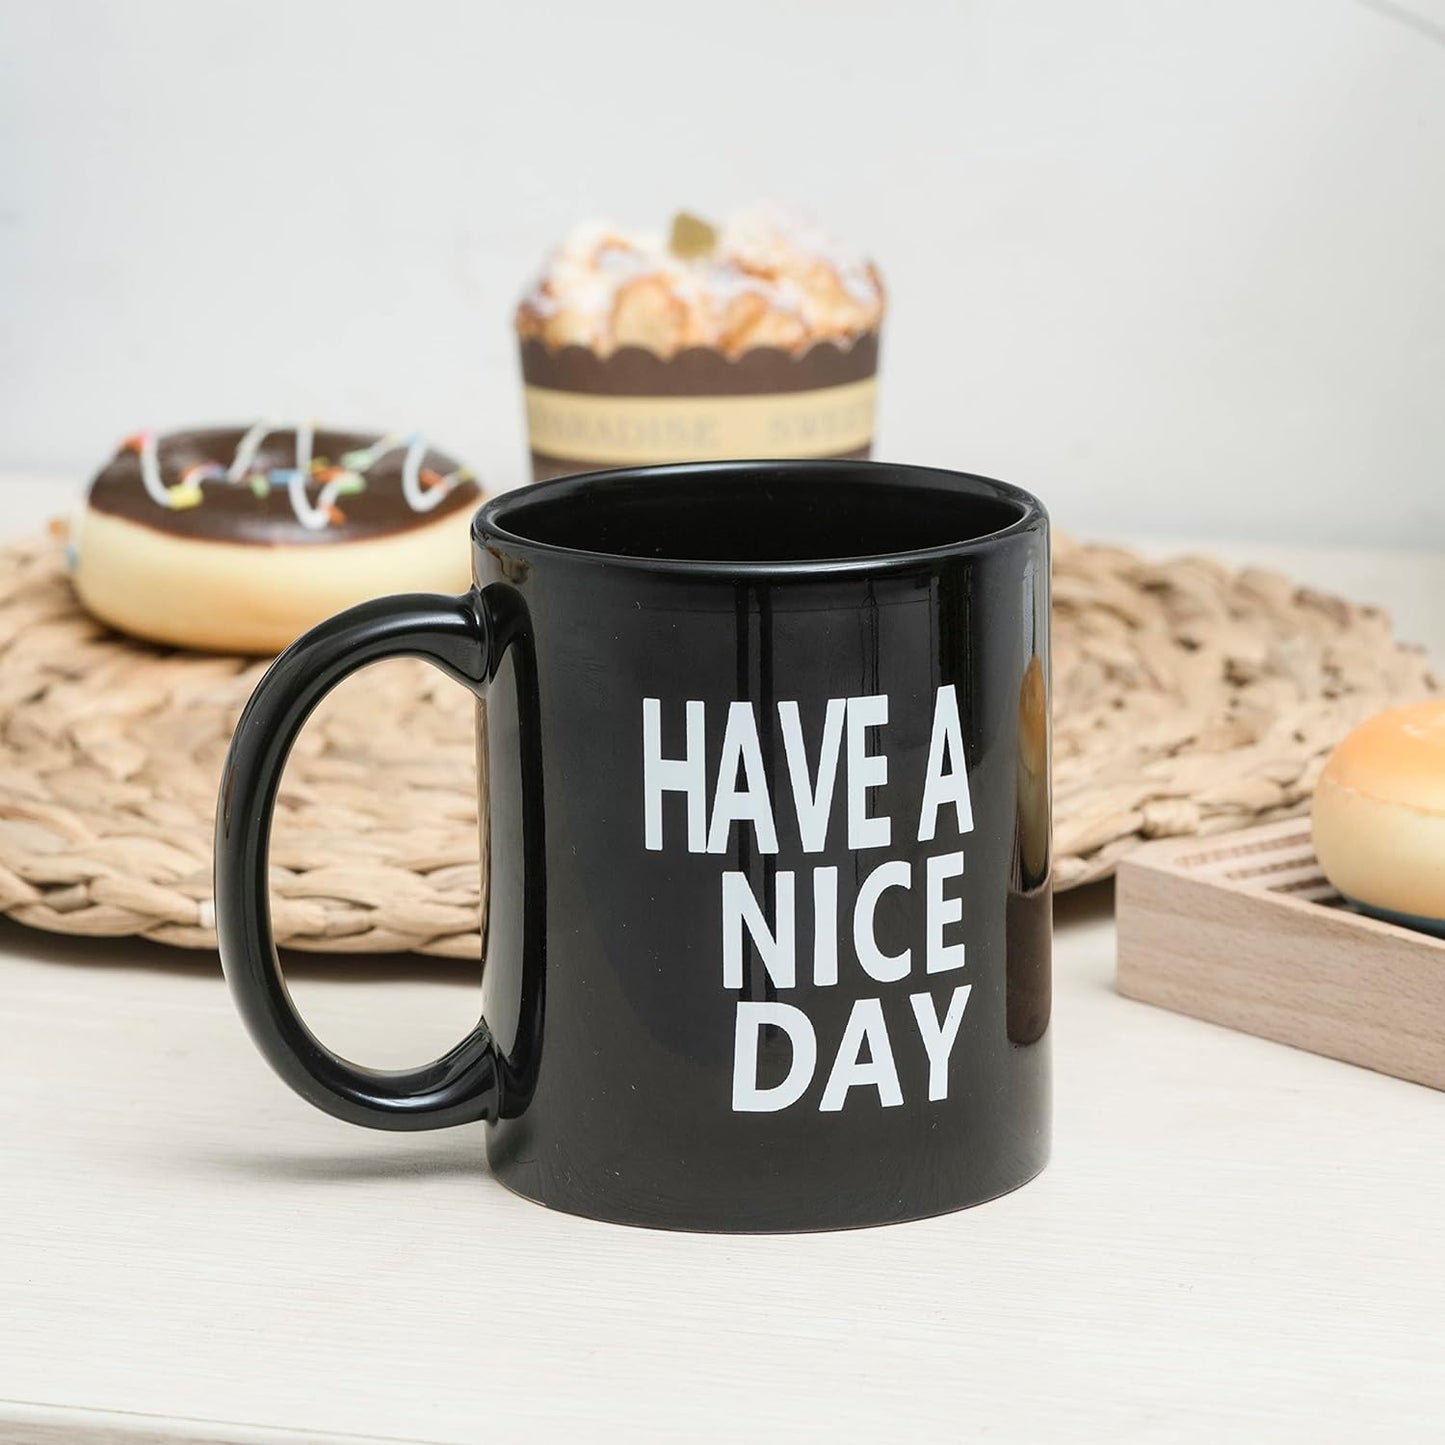 Burcha Design Coffee Mug - Funny Coffee Mug for Women and Men, Funny Gifts (Have a Nice Day)